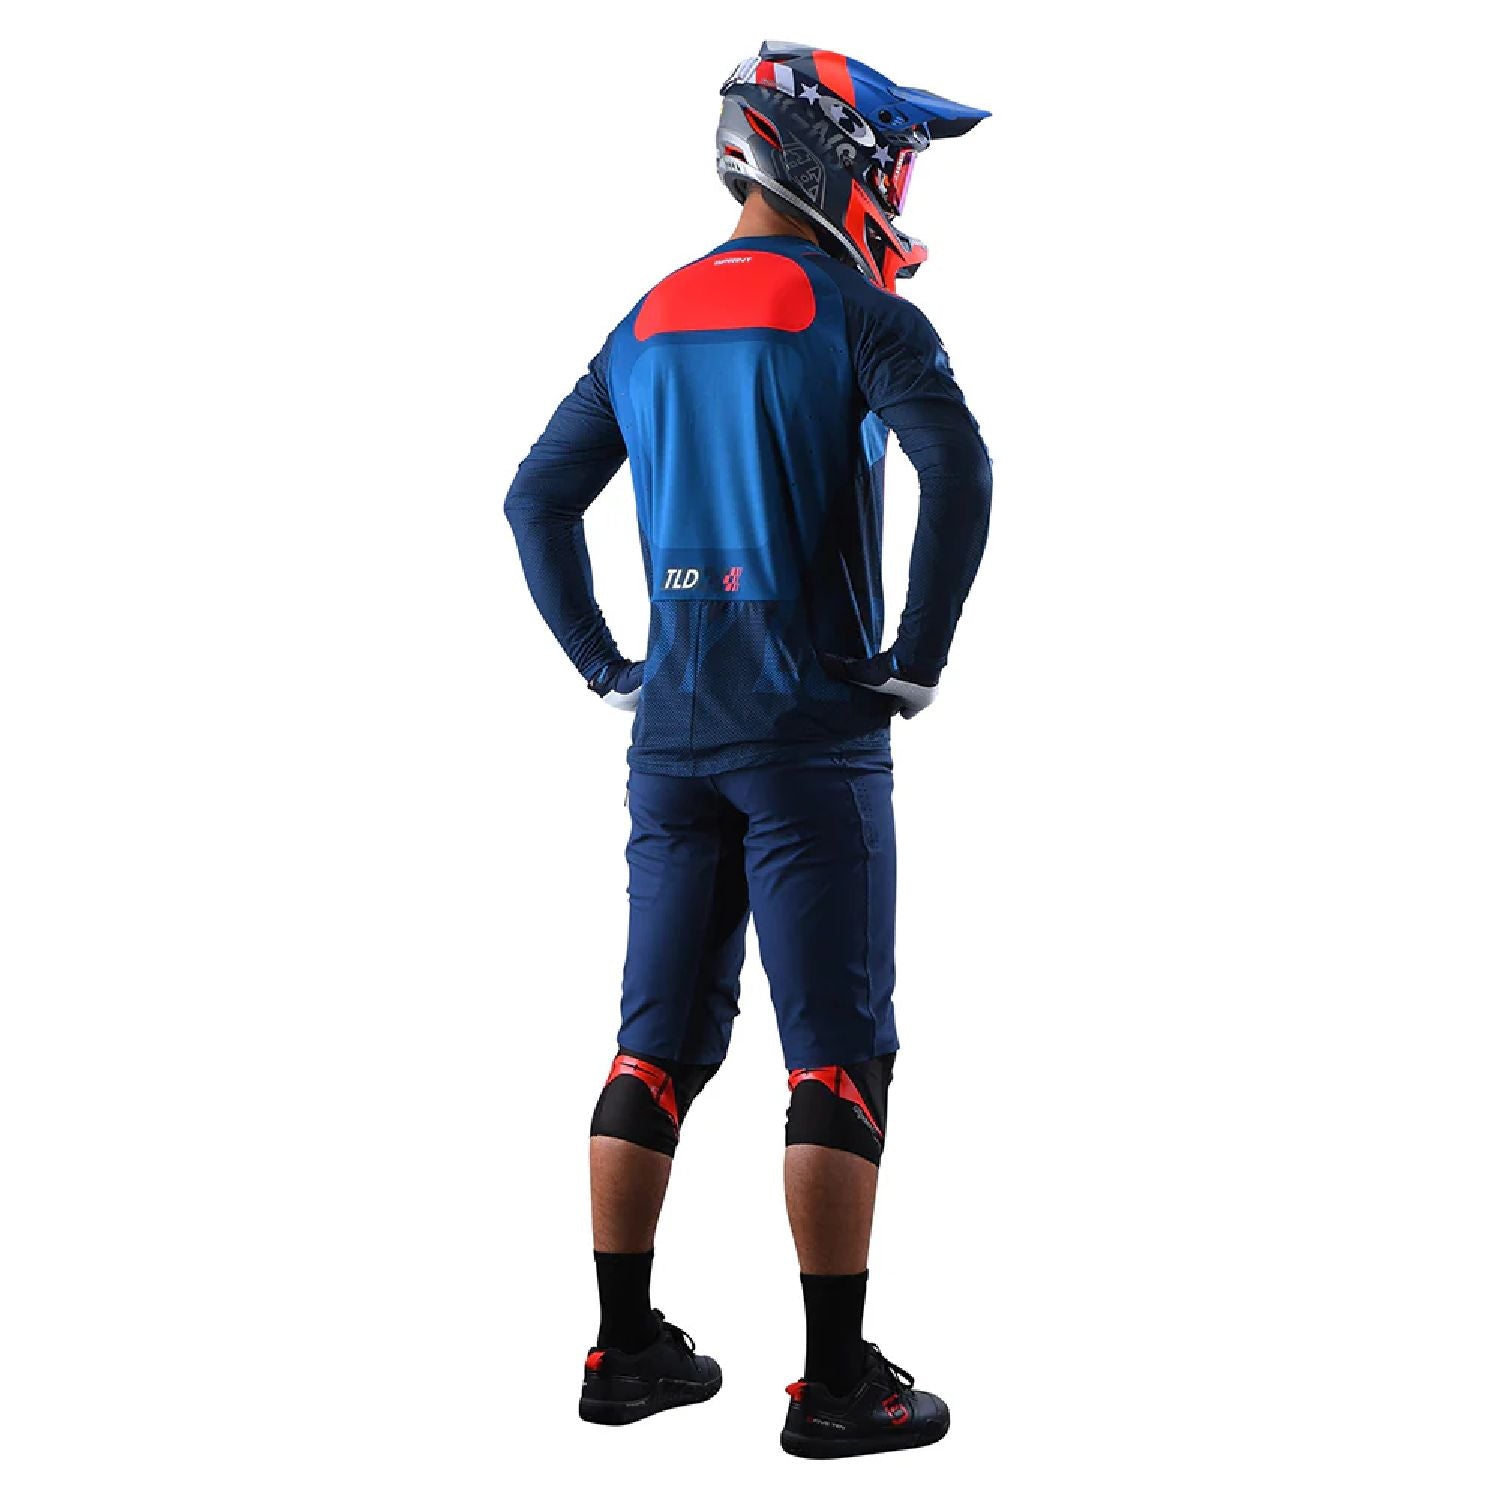 Troy Lee Designs Sprint Ultra Short Solid Dark Slate Blue - Troy Lee Designs Bike Shorts